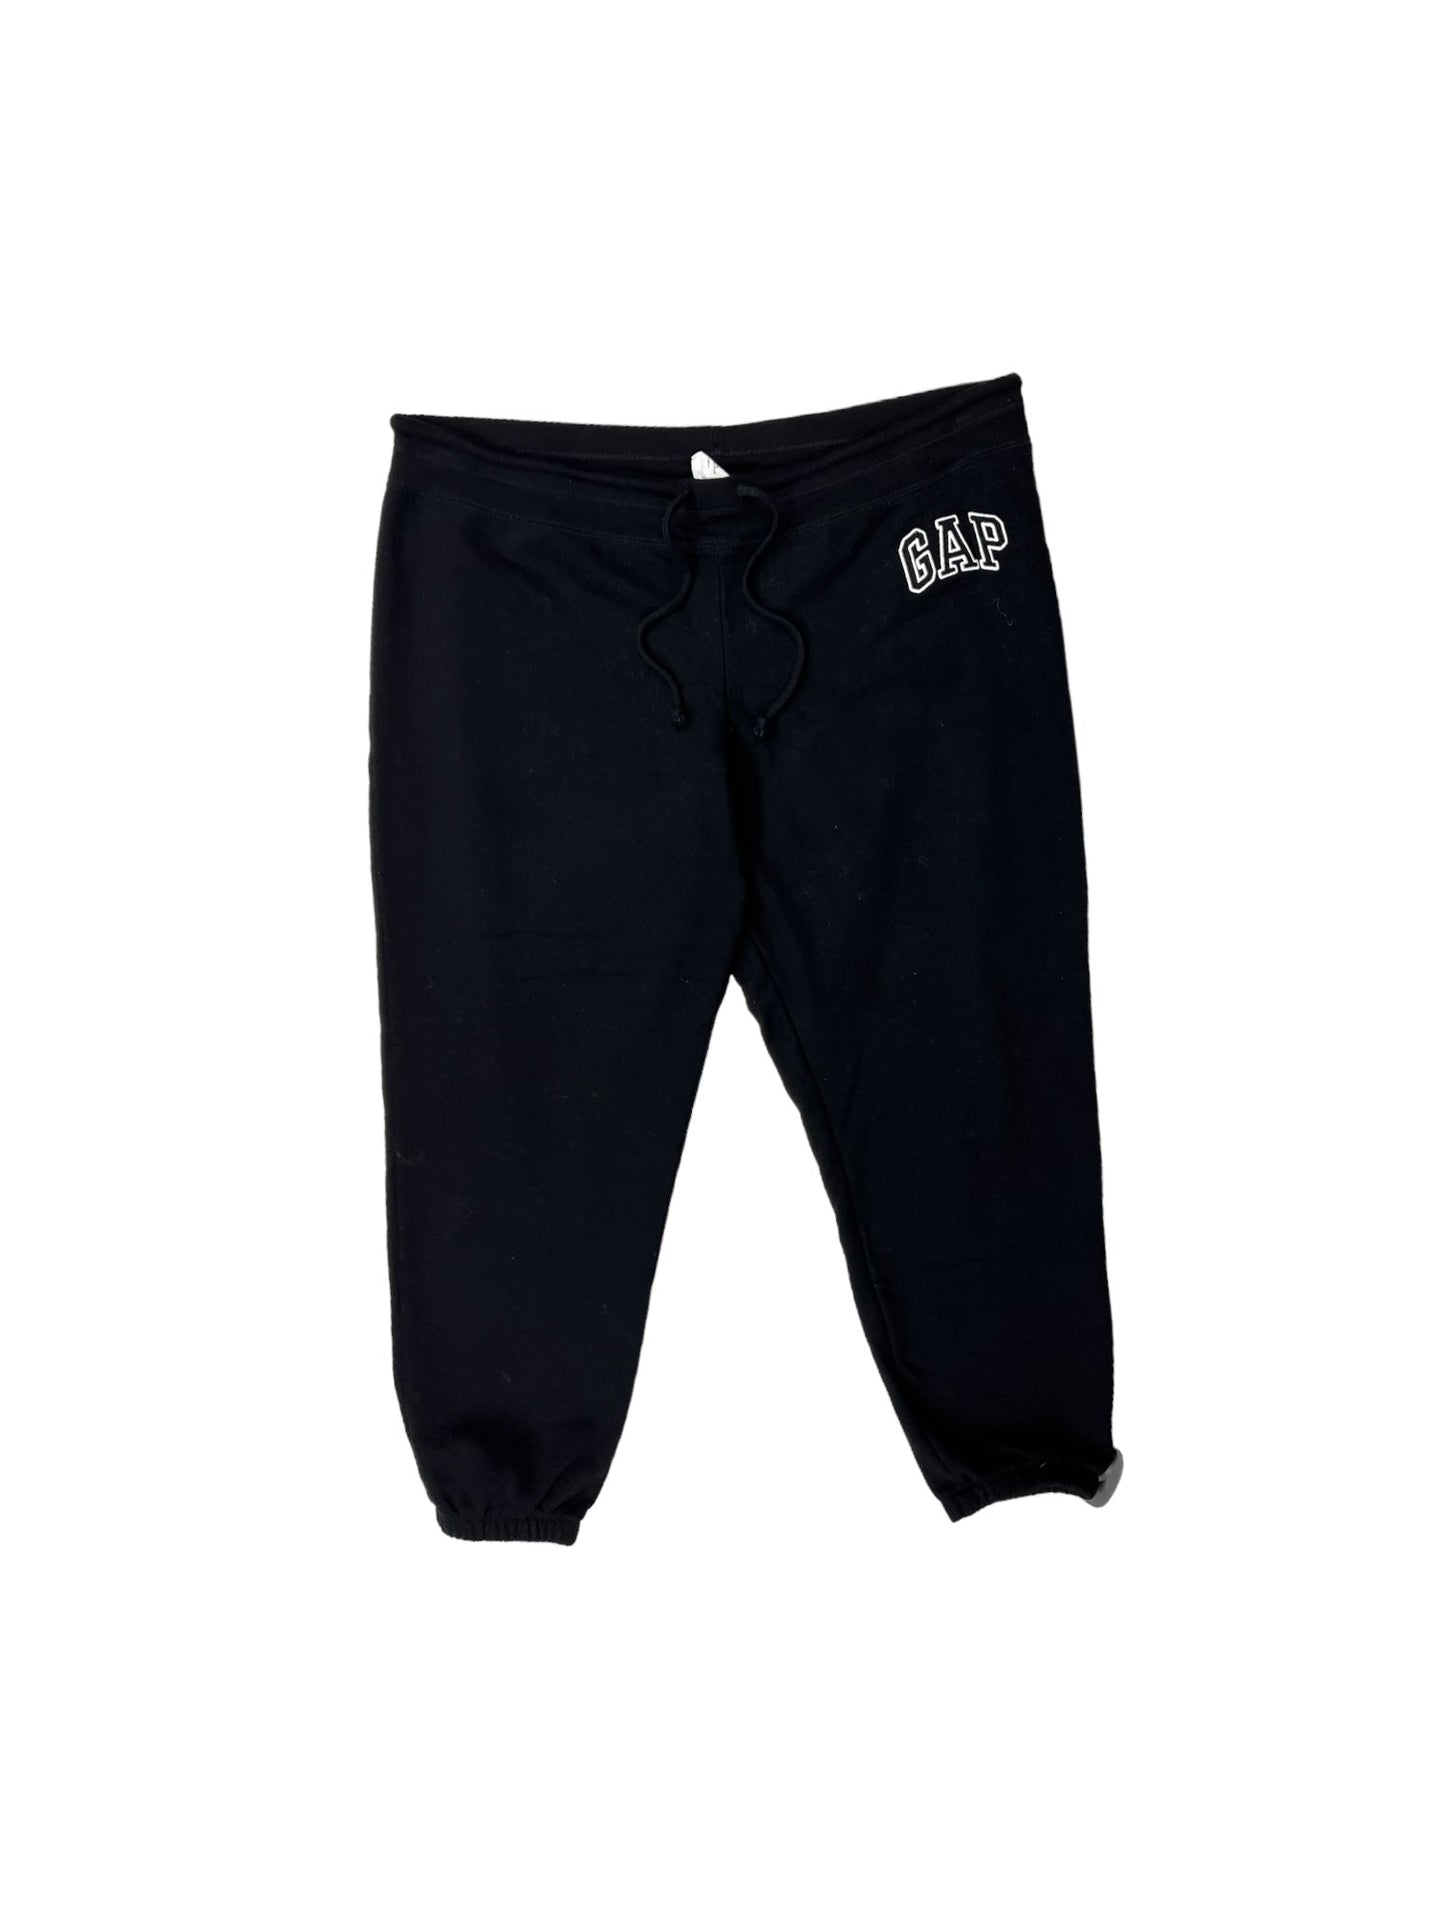 Black Athletic Pants Gap, Size Xl